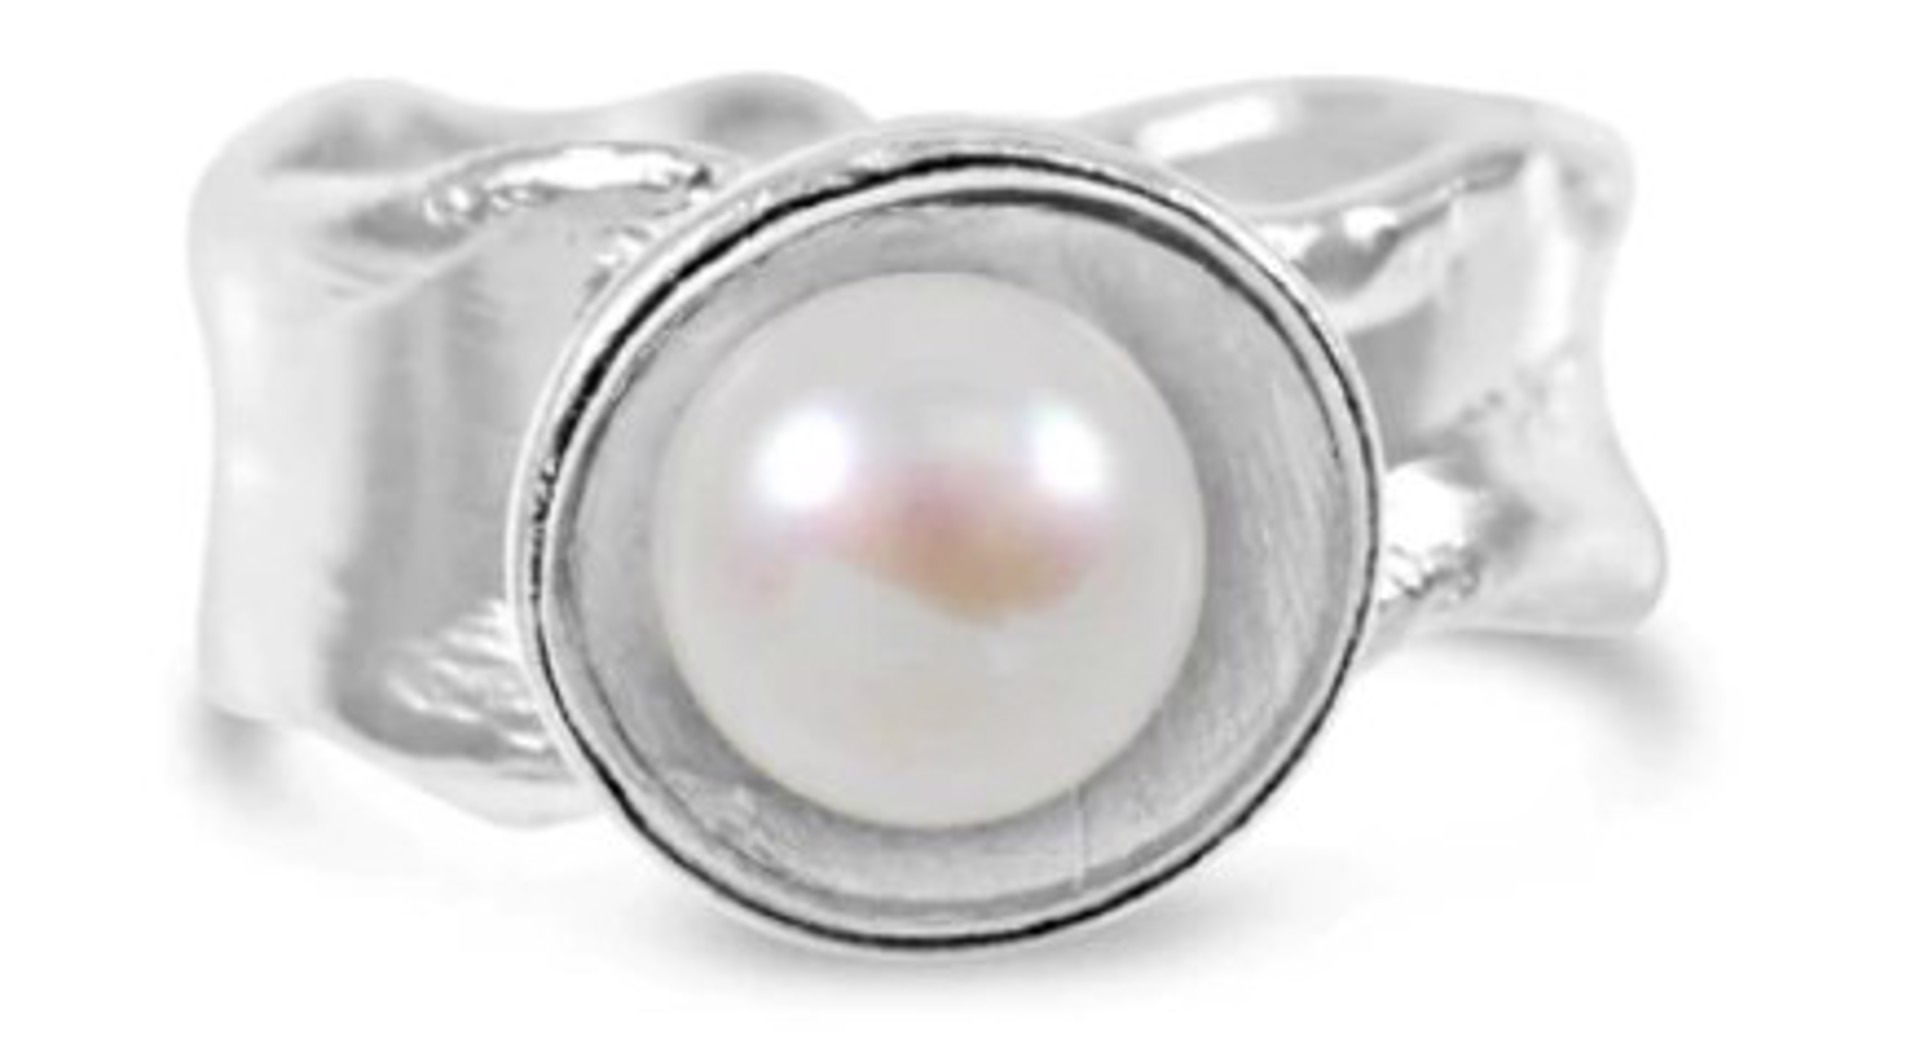 Pearl Ripple Ring by Kristen Baird